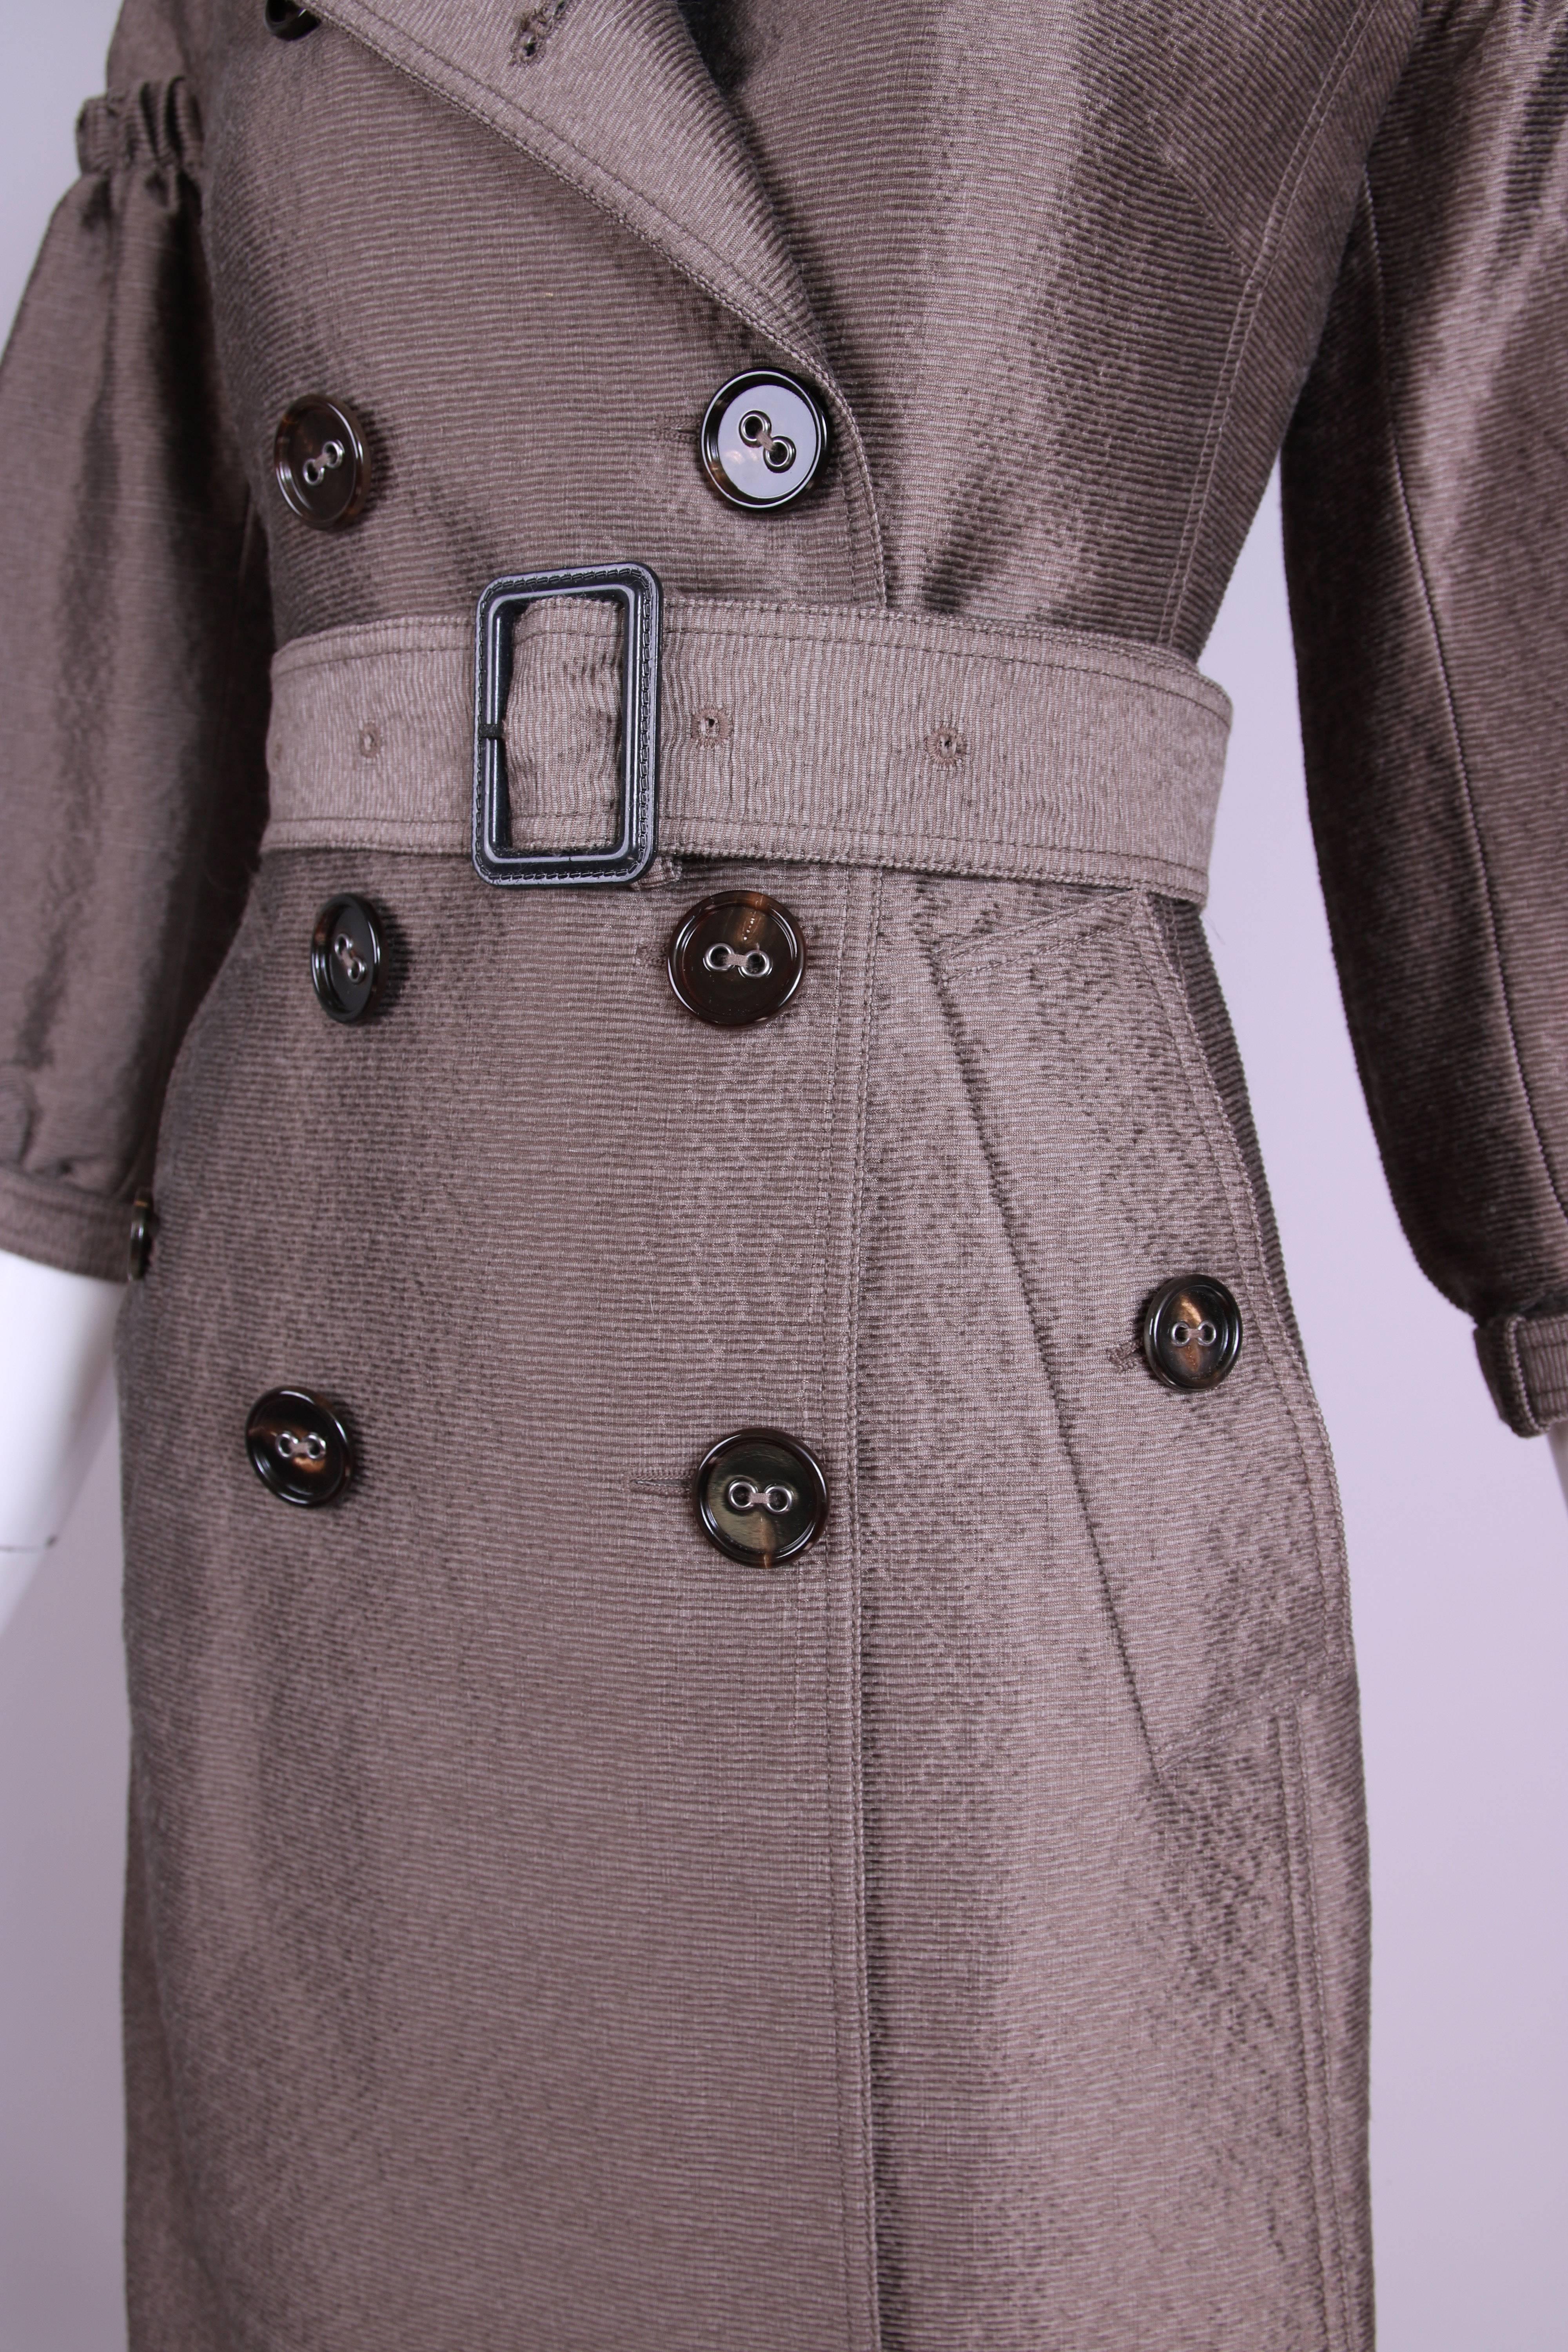 Burberry Porsum Mocha Trench Coat w/Puffed 3/4 Sleeves & Belt 1